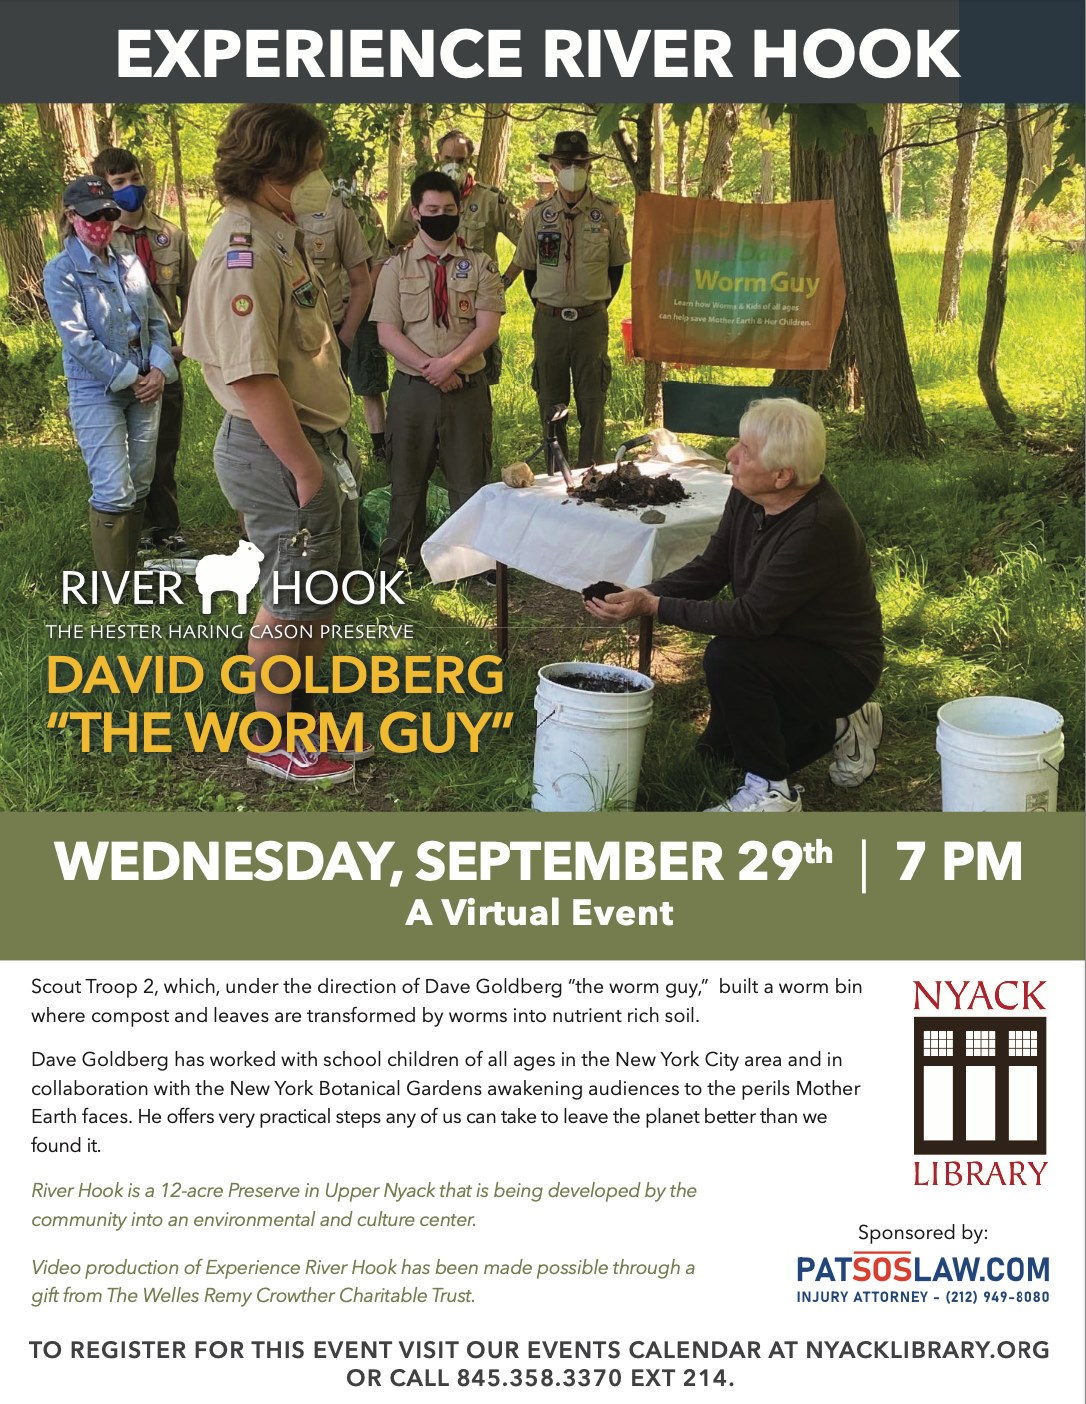 Experience River Hook: David Goldberg "The Worm Guy"